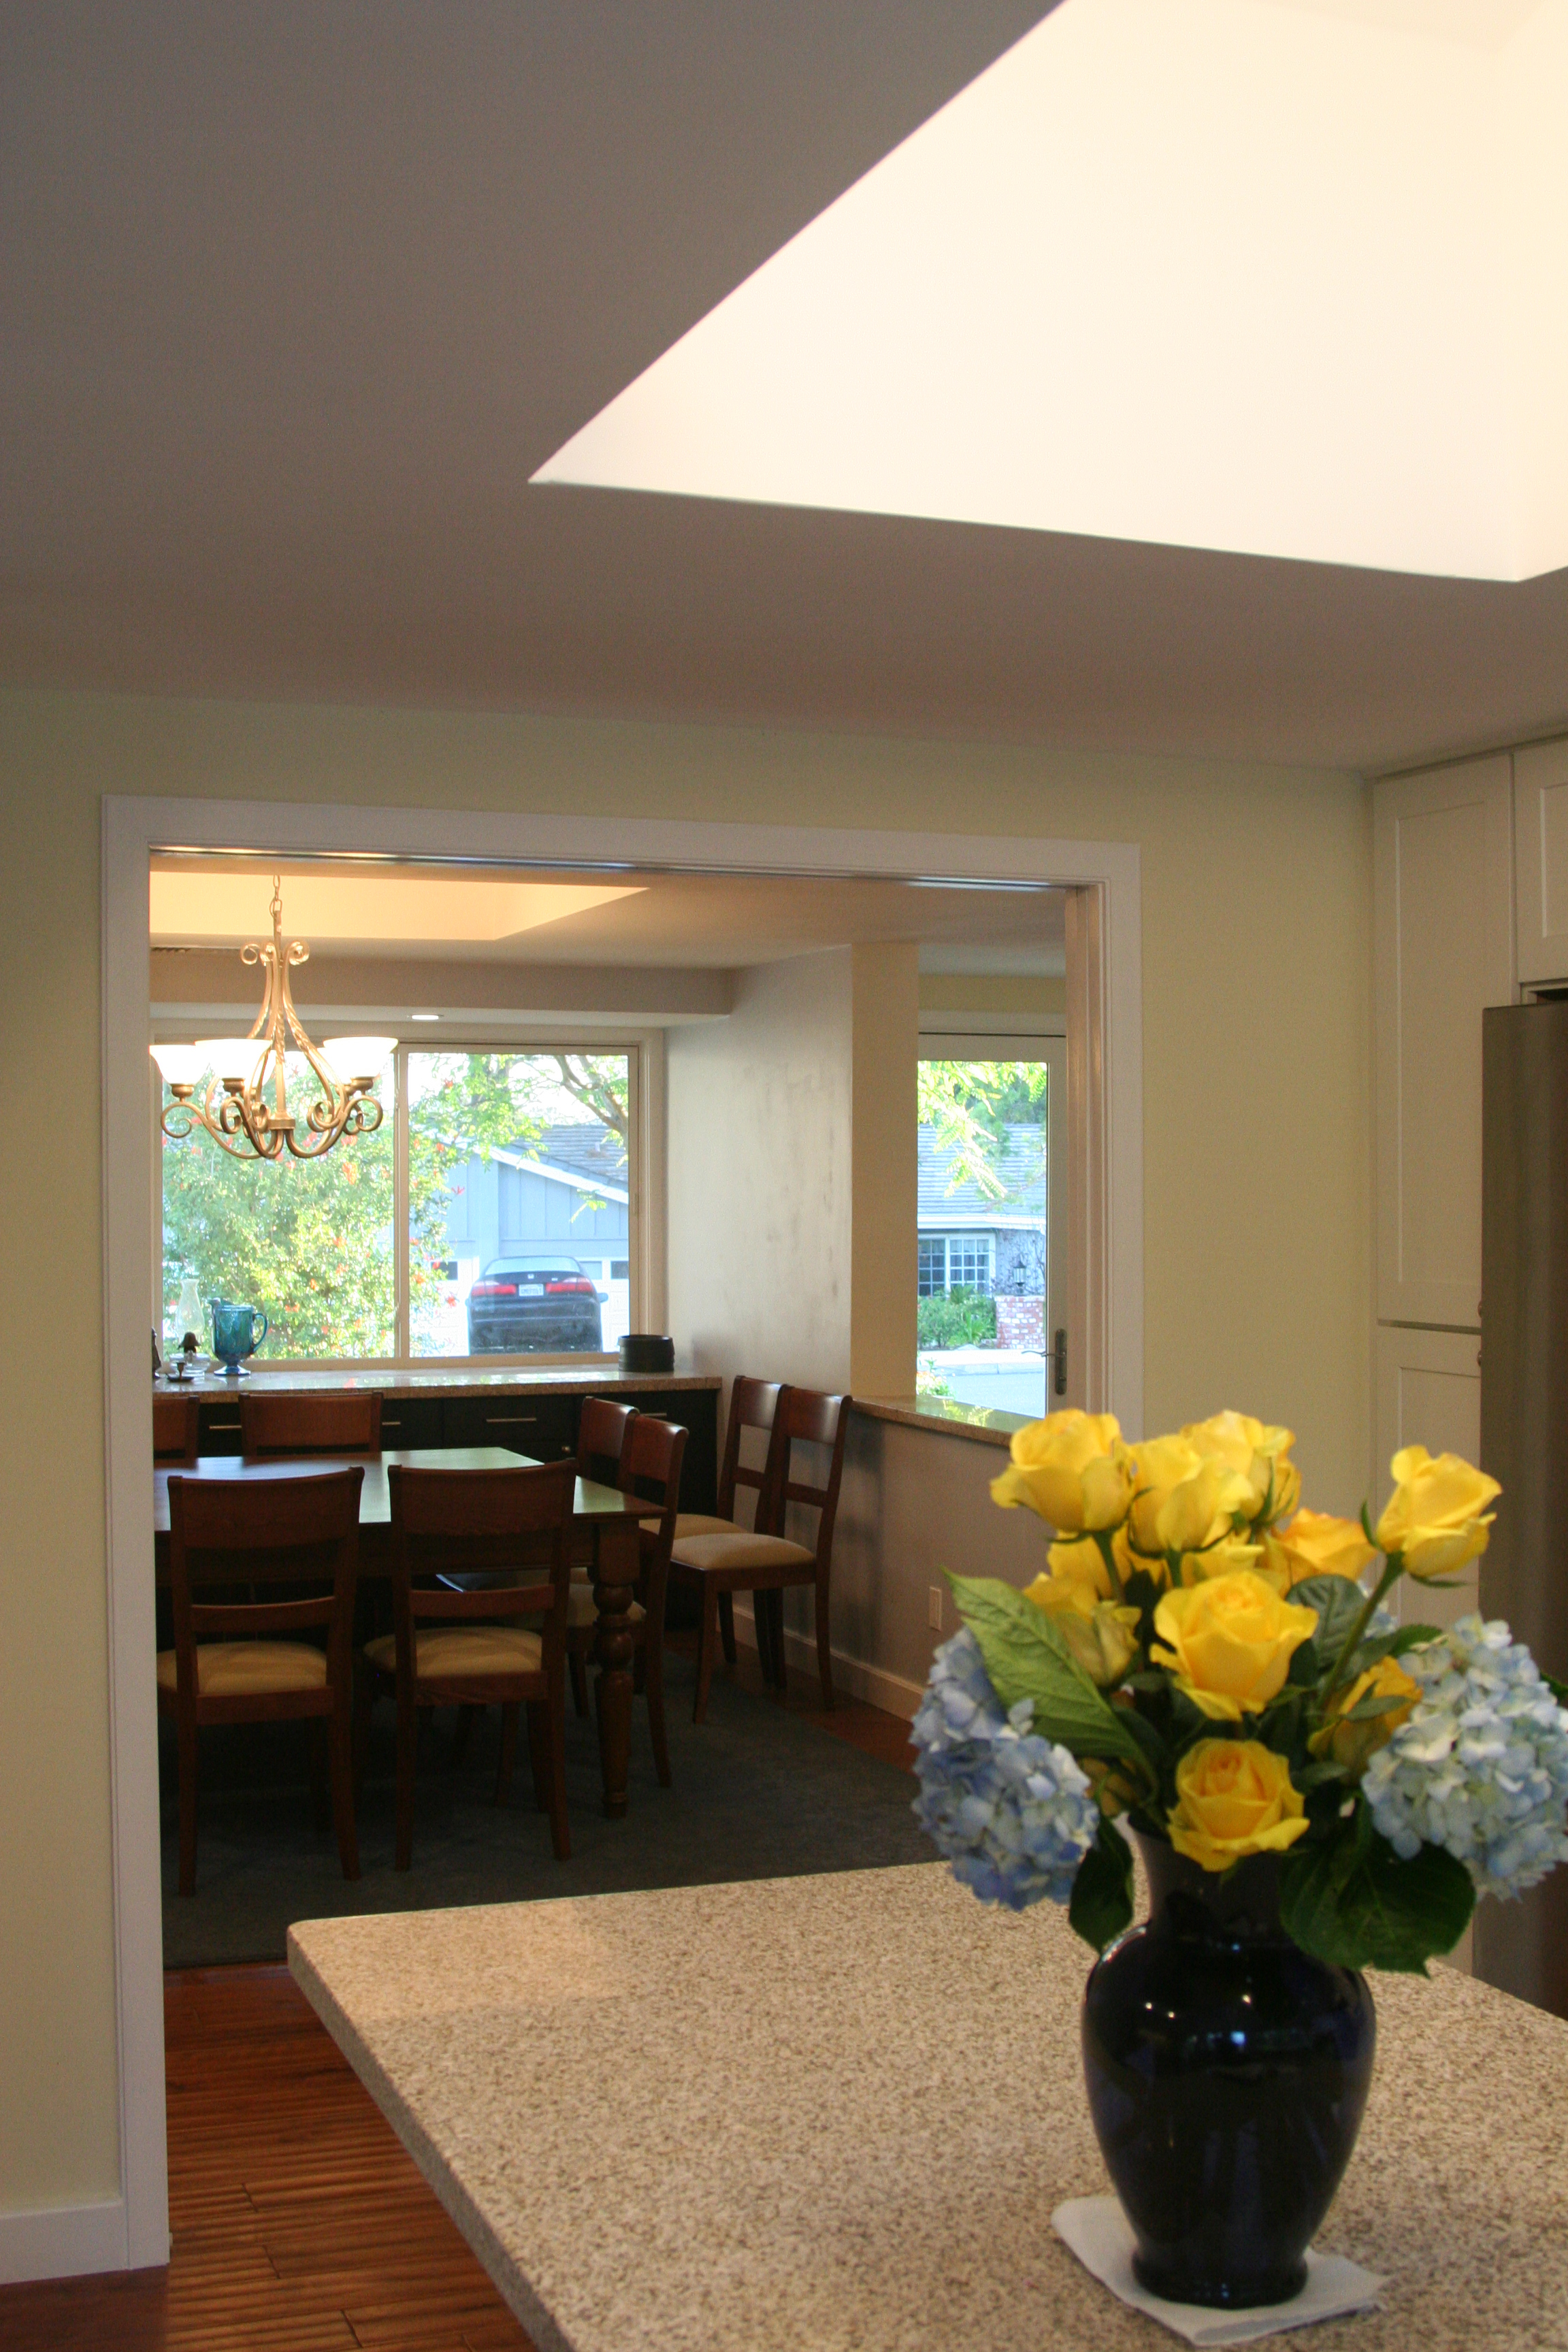 Kitchen Island Skylight - Dining - 2-Story Addition - Sustainable WholeHouse Remodel - Landscape - ENR architects, Granbury, TX 76049